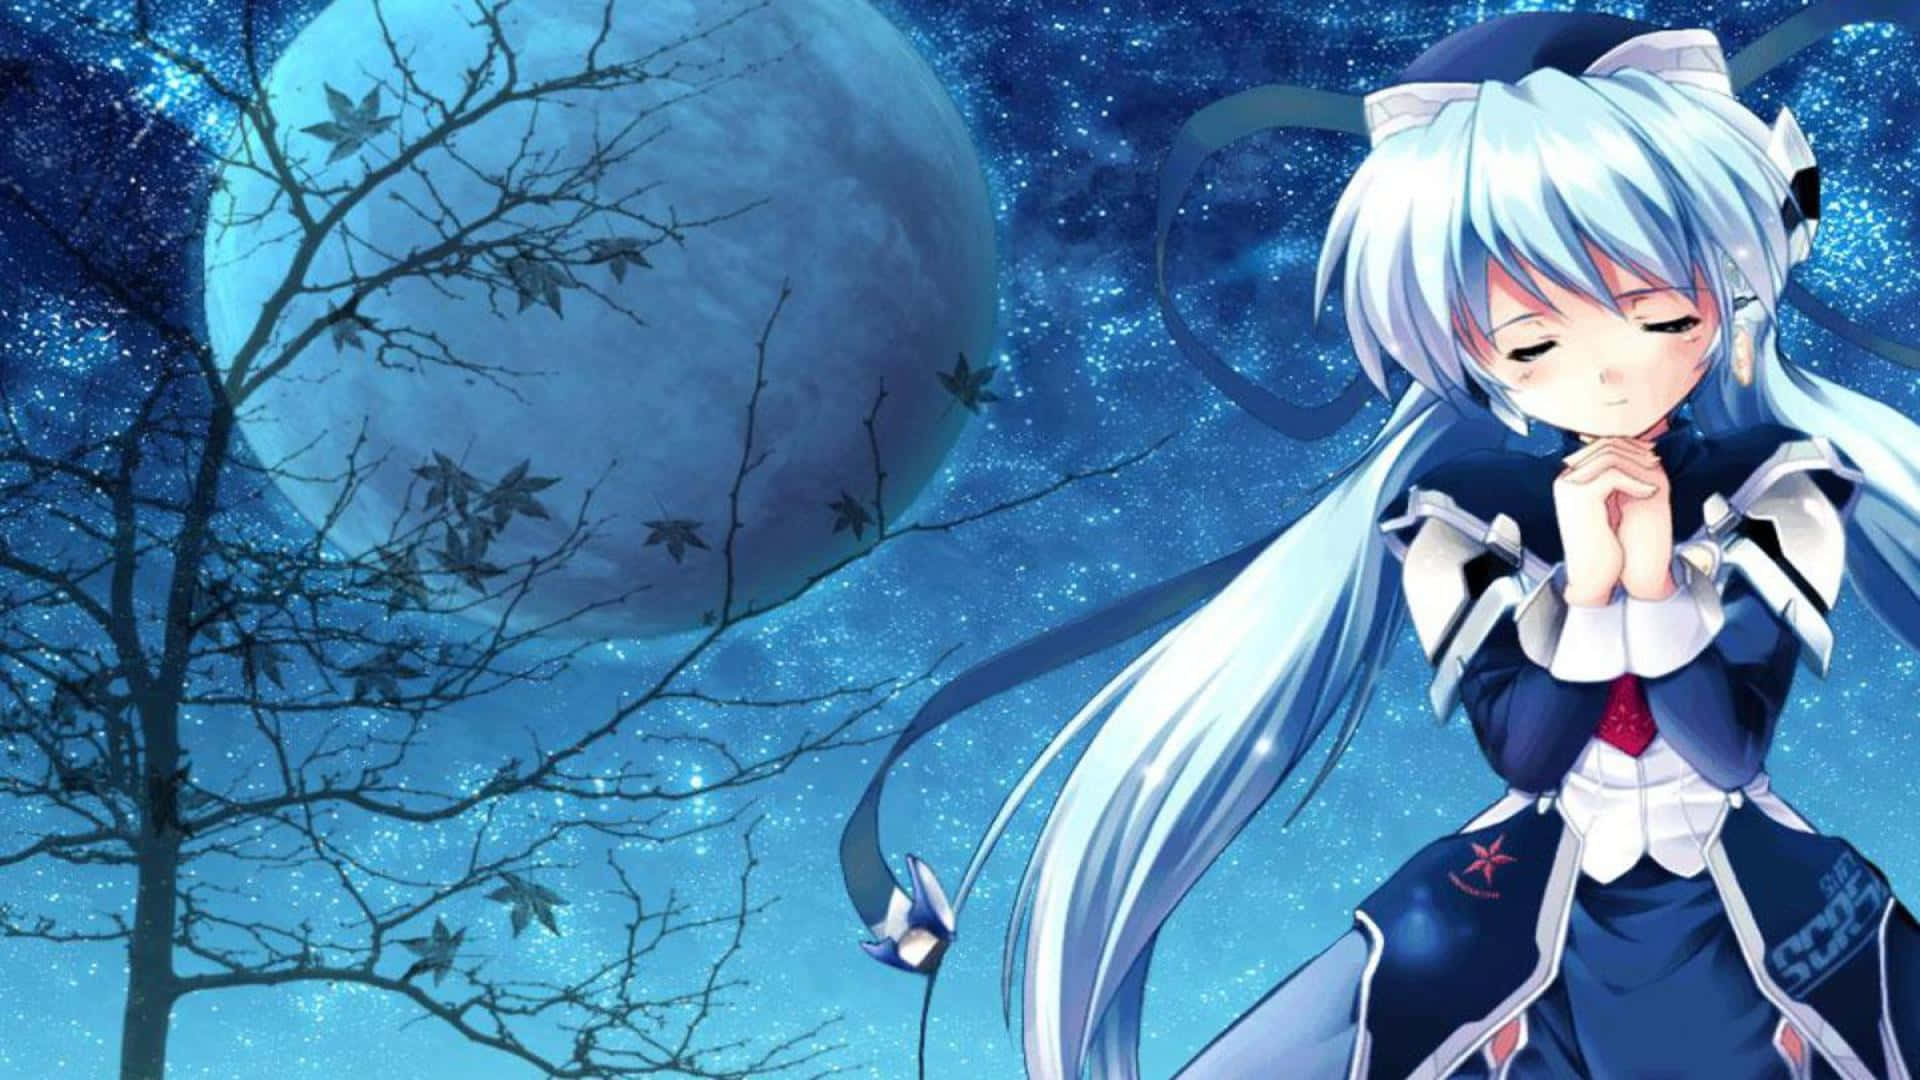 Sad Crying Anime Girl Under The Moonlight Wallpaper